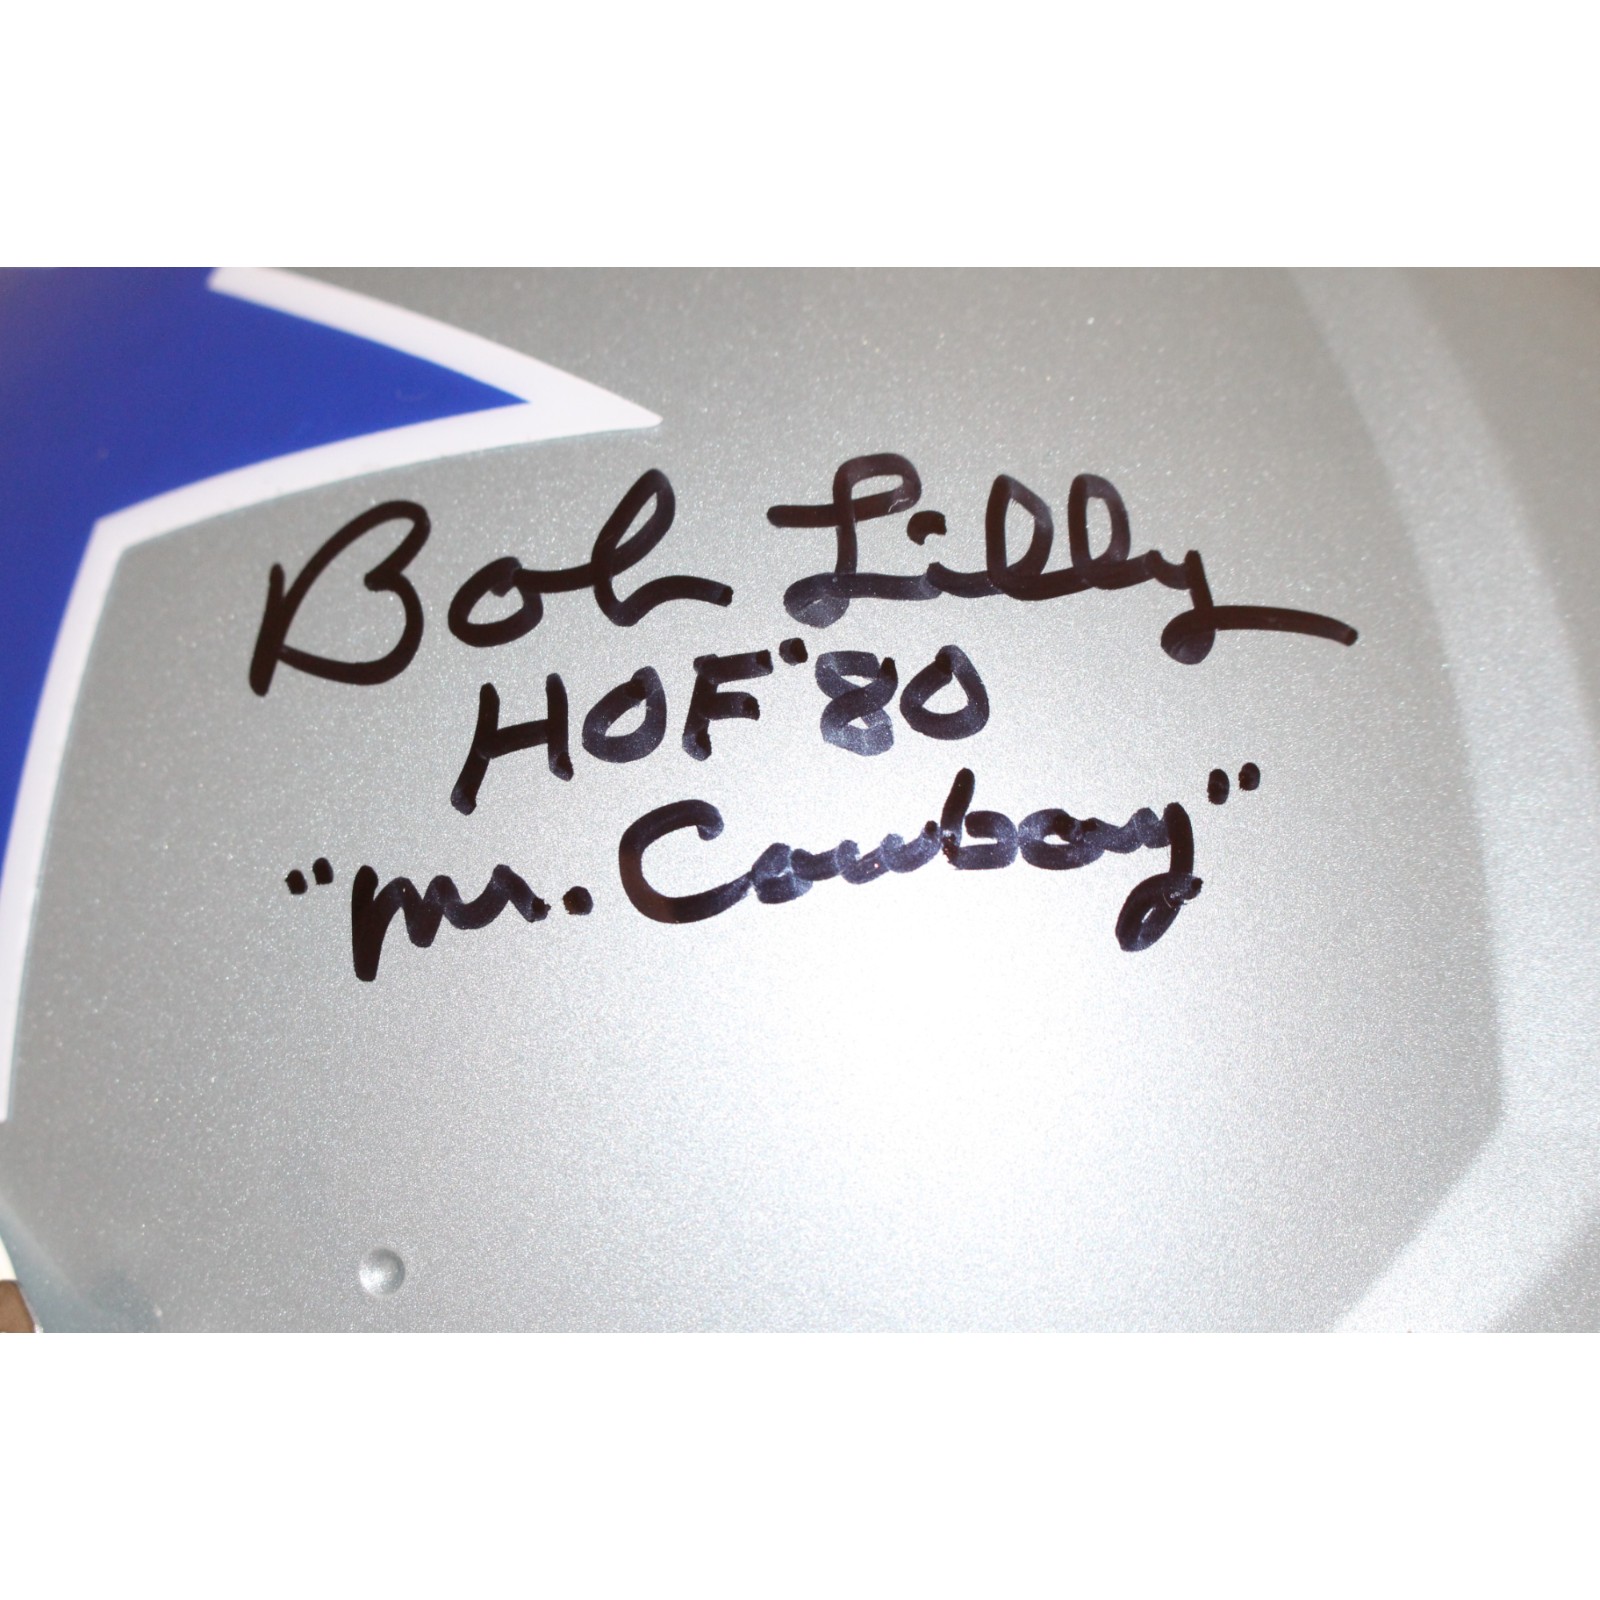 Bob Lilly Autographed Dallas TB Authentic Helmet 2 insc. Beckett